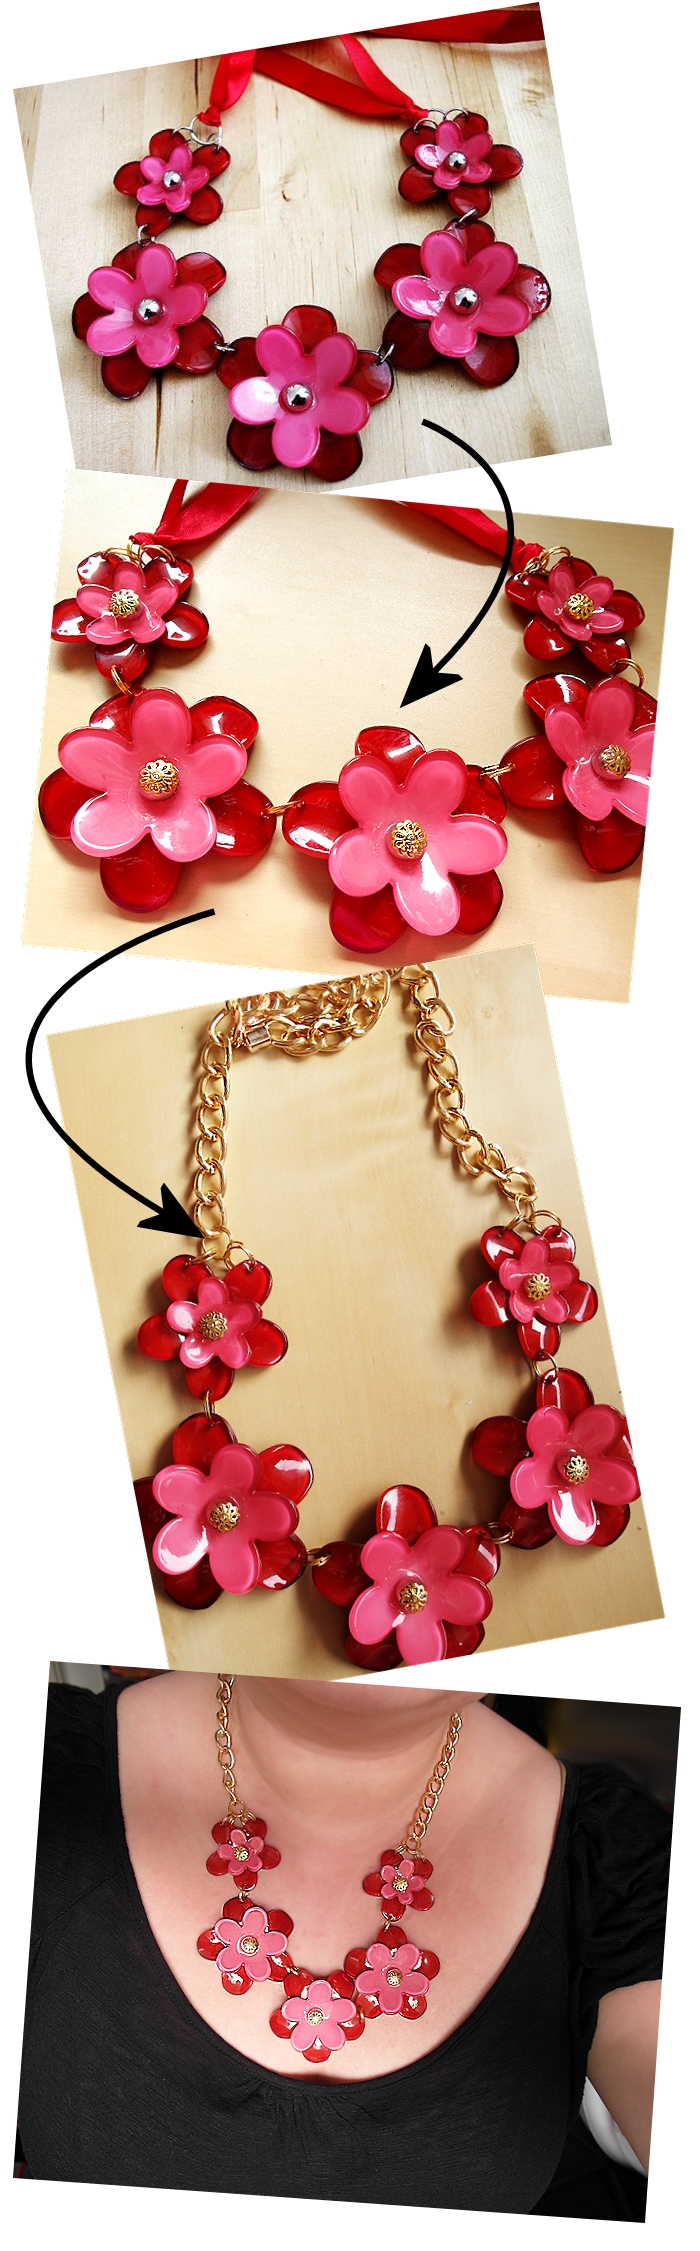 Große Größen Plus Size Fashion Blog DIY necklaces